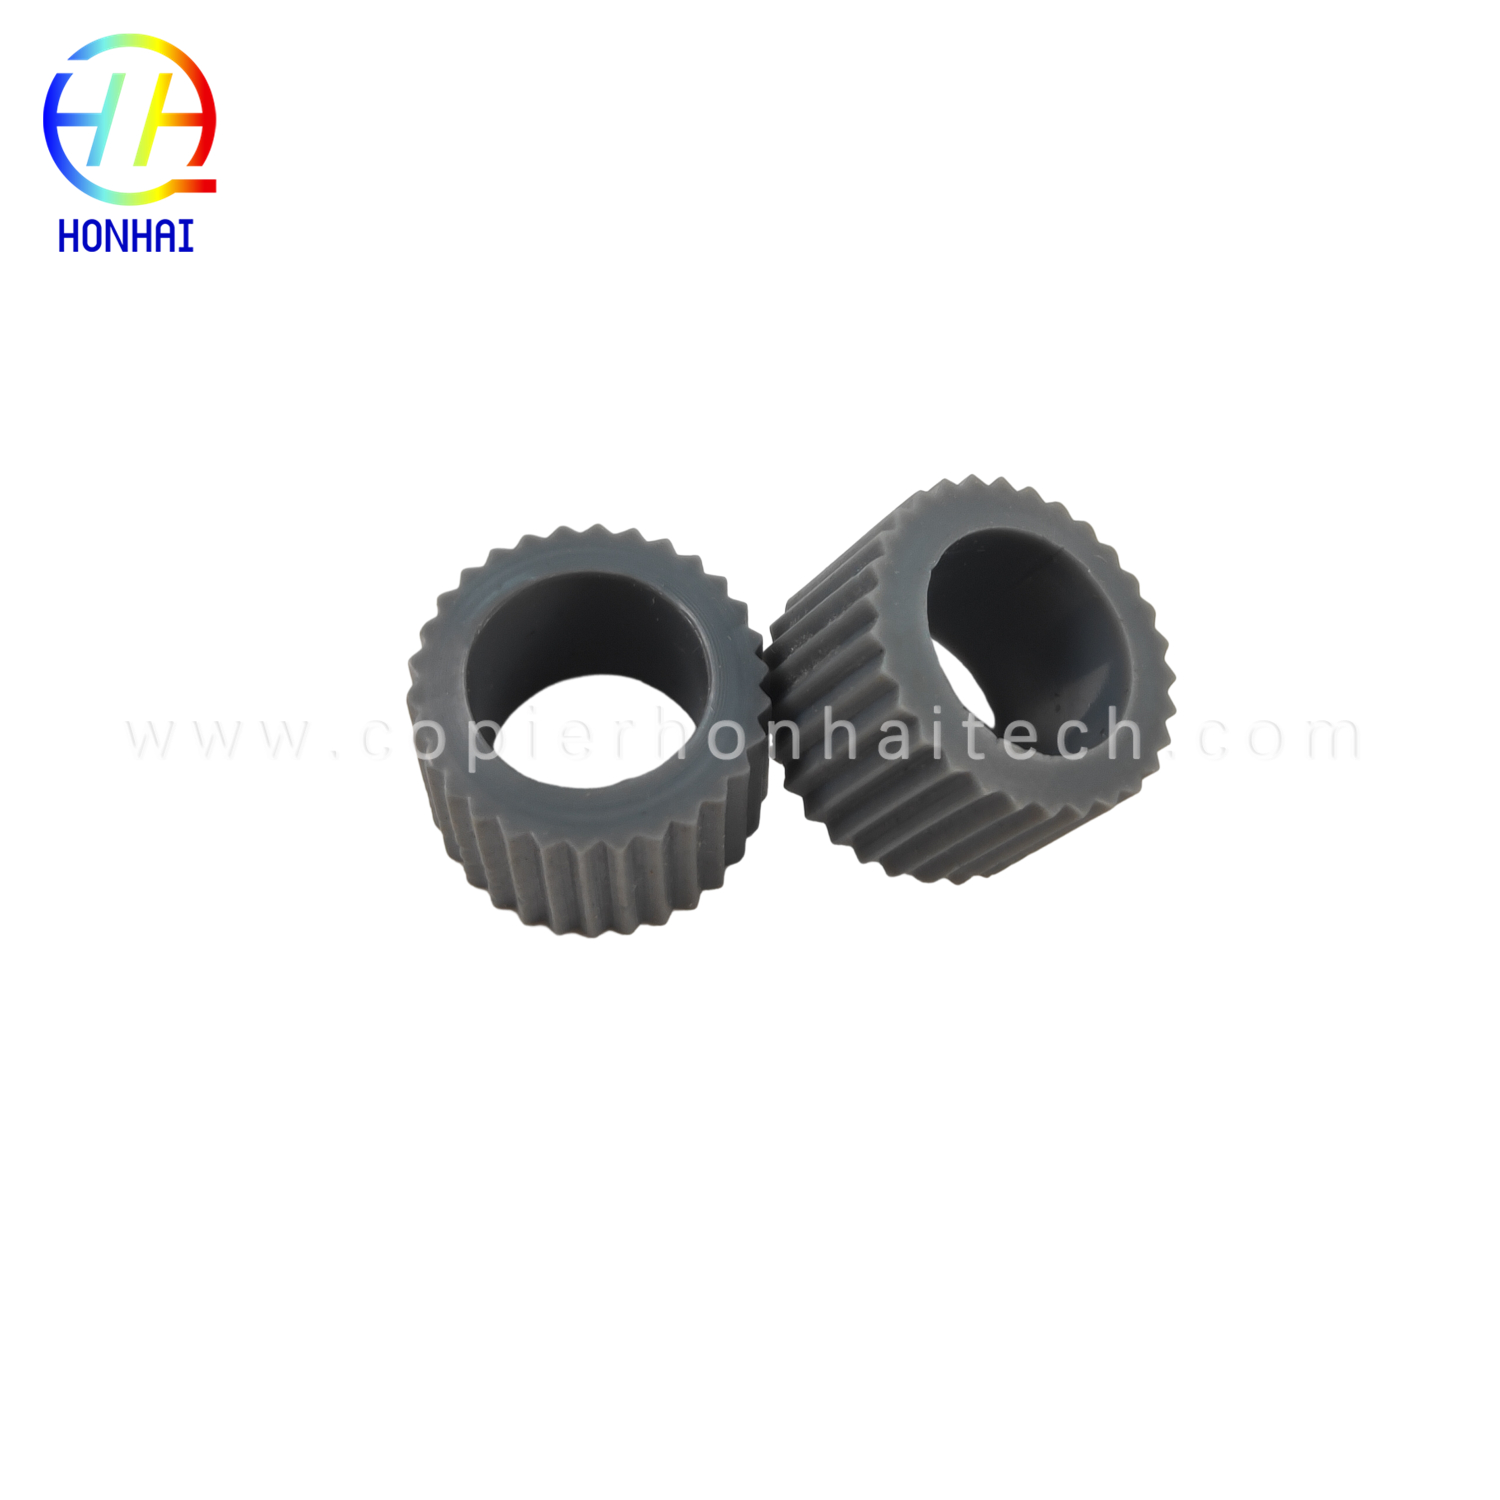 https://www.copierhonhaitech.com/paper-feed-roller-tyre-for-canon-ir-5055-5065-5075-5050-7086-7095-7105-105-9070-product/